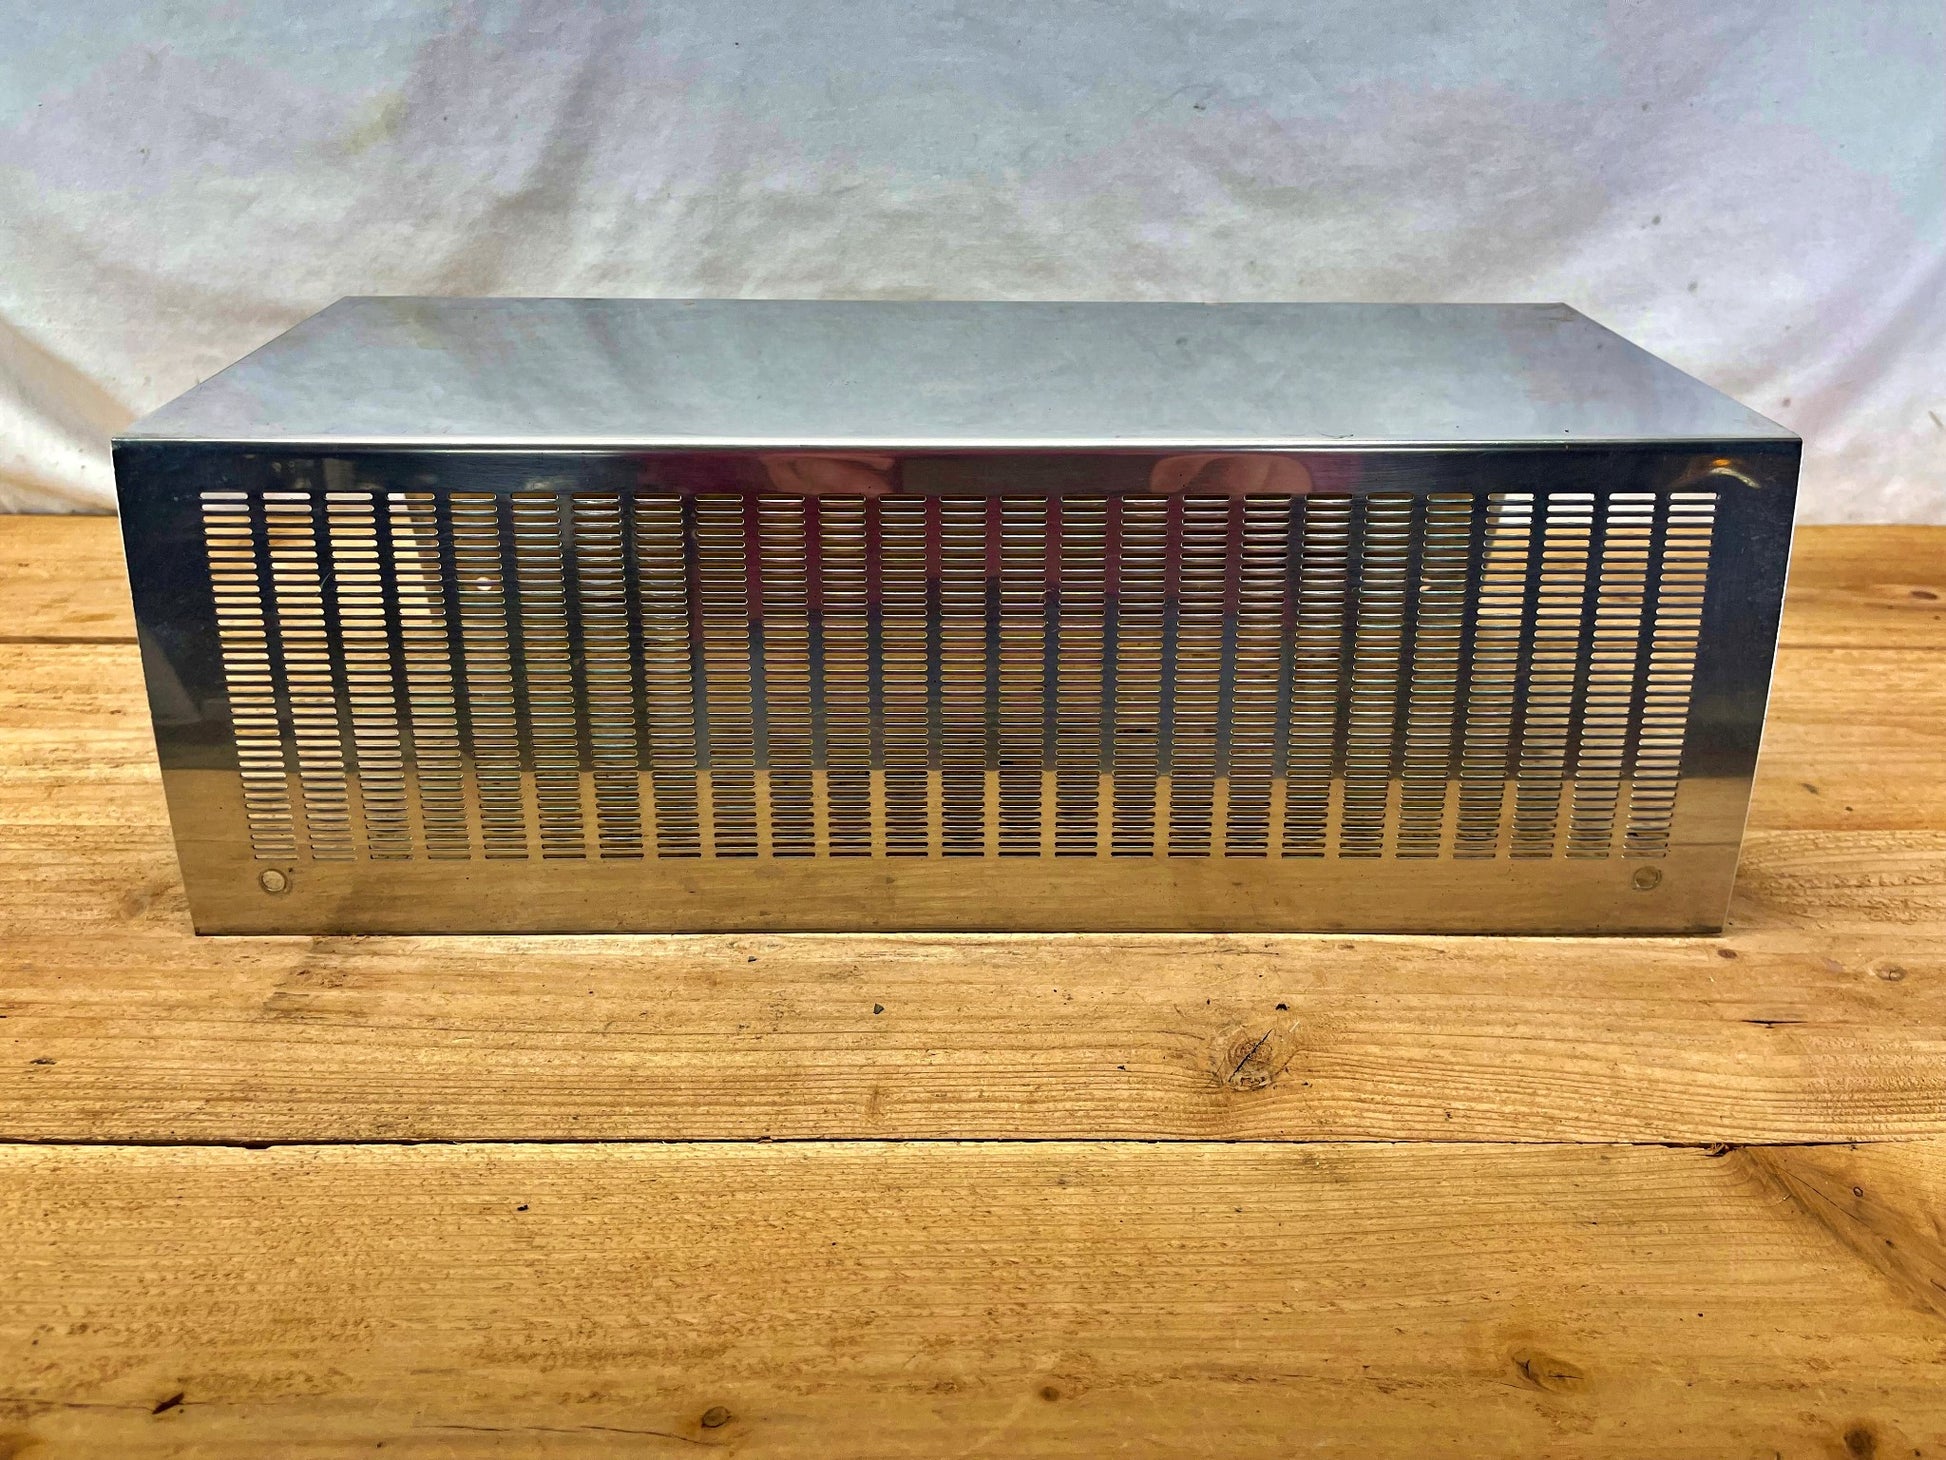 Federal Signal Twinsonic Lightbar - 18" Wide Stainless Steel Speaker Grill